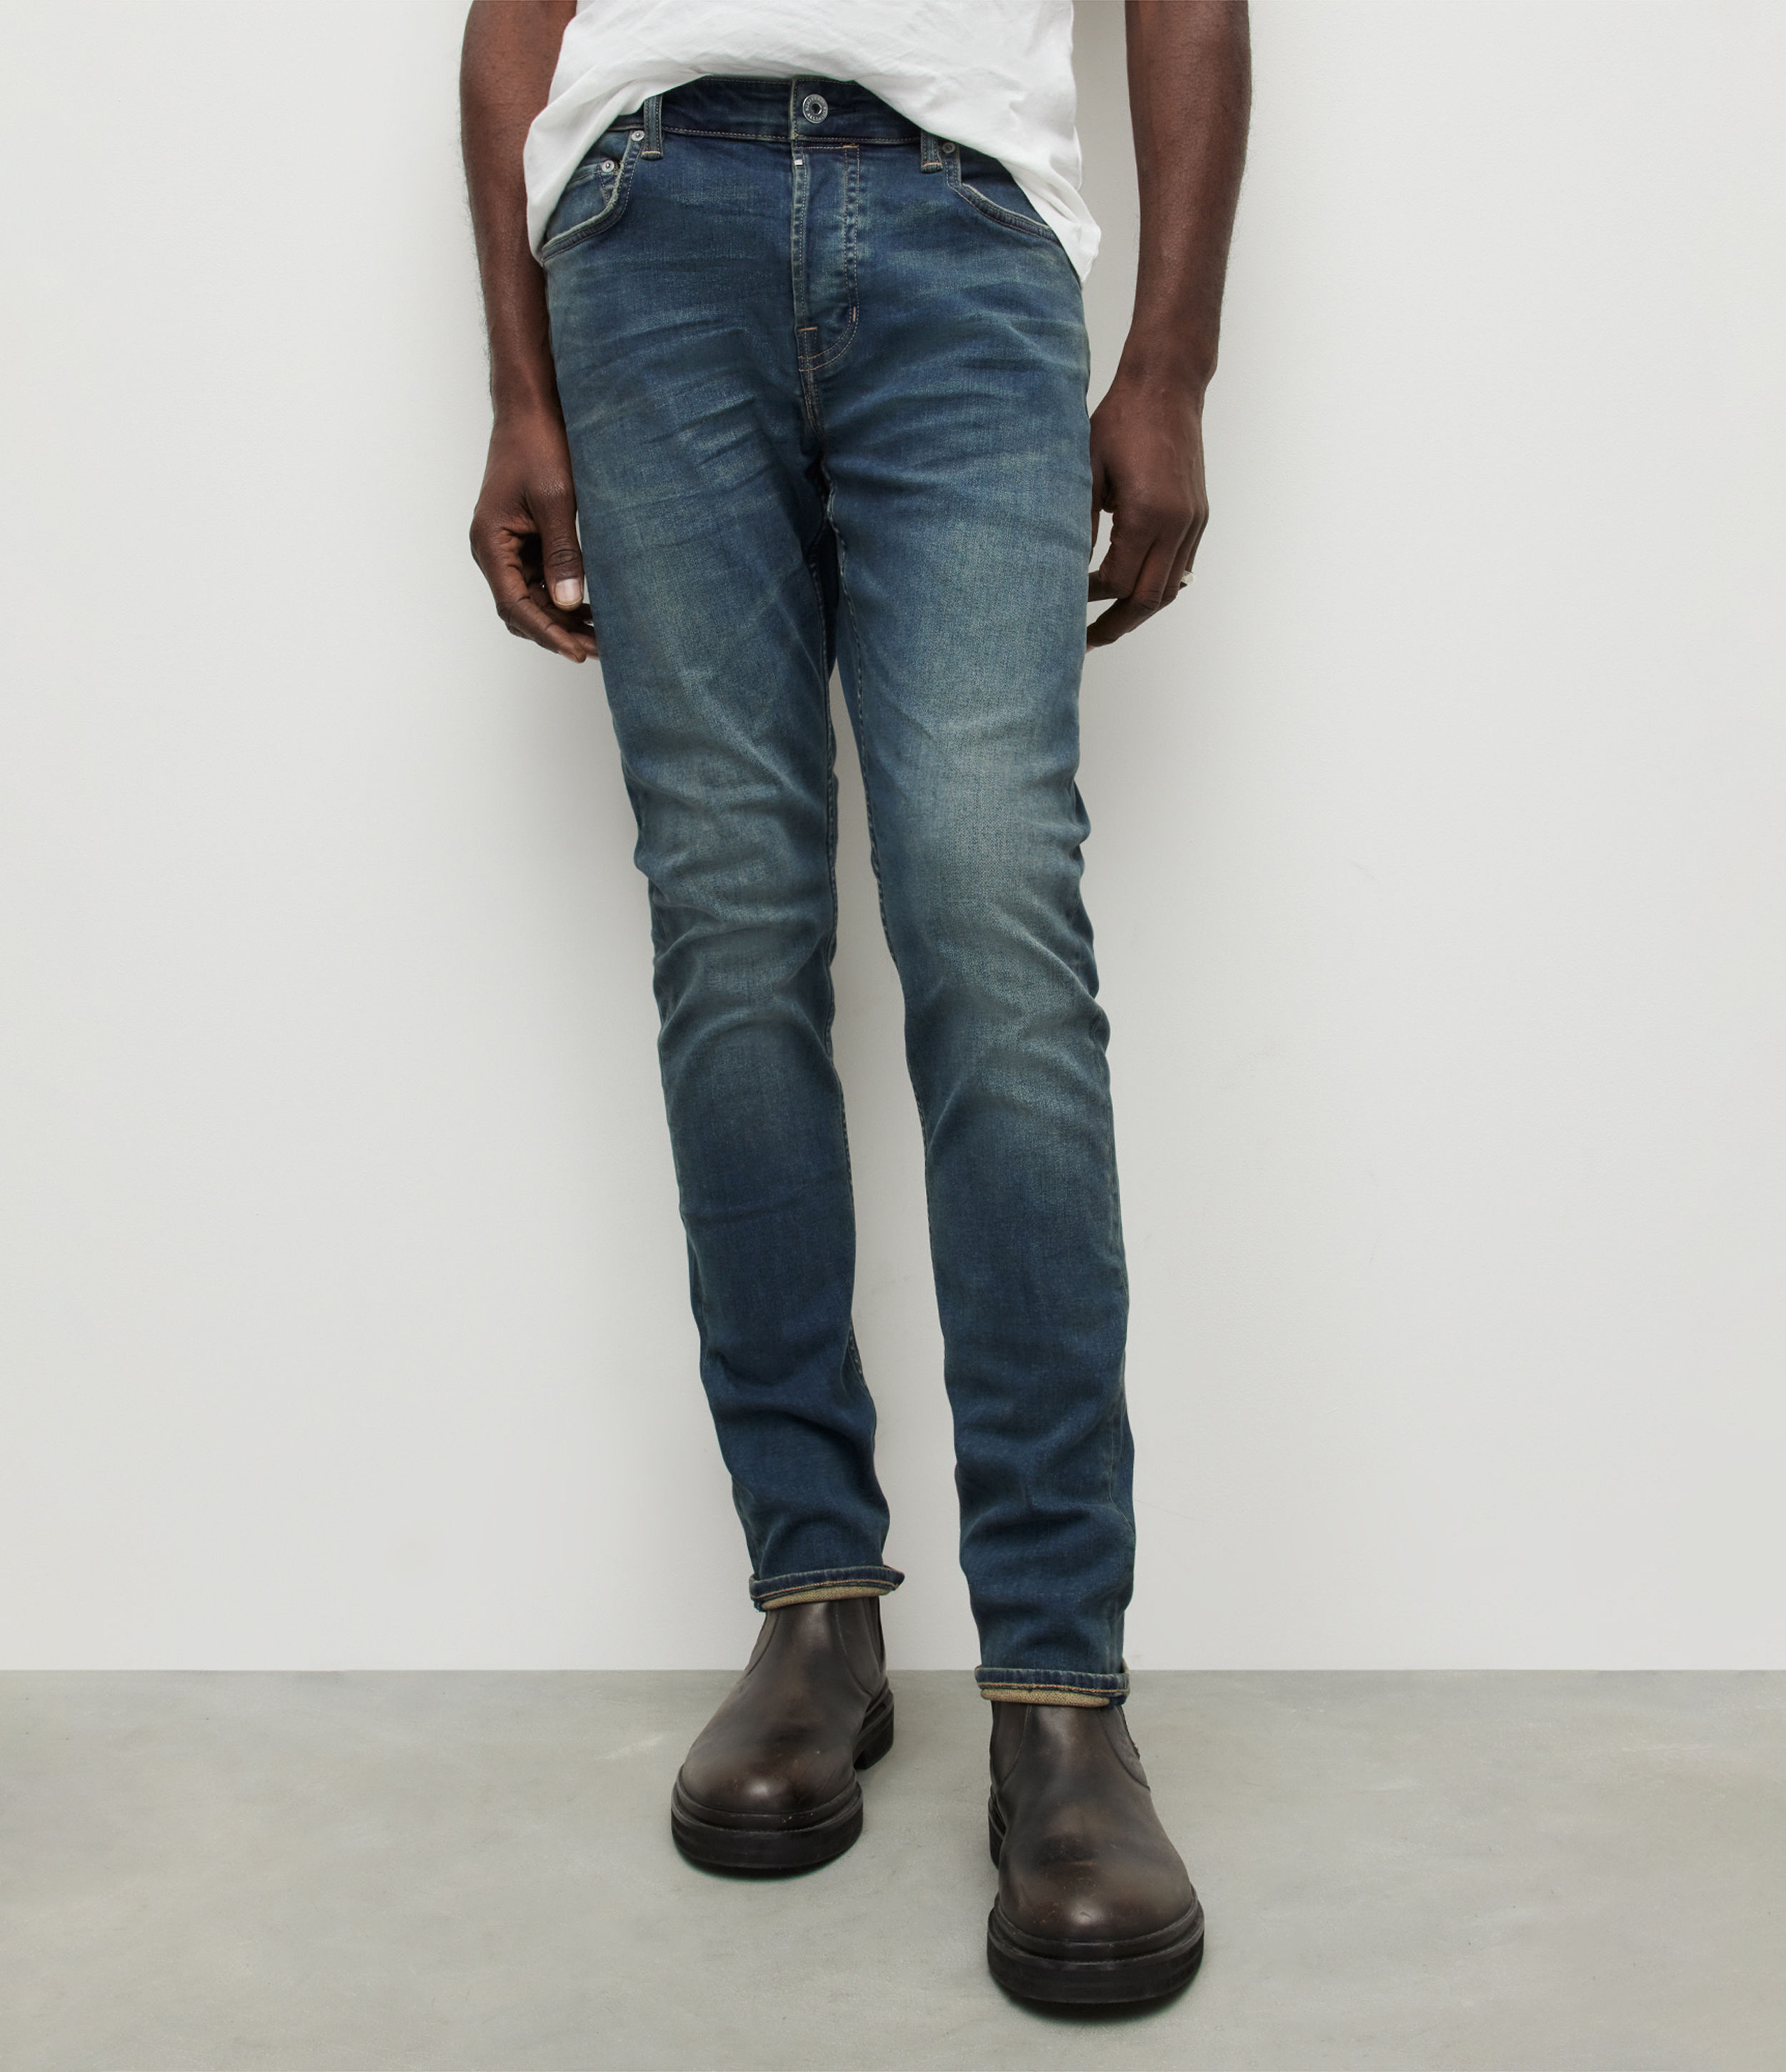 AllSaints Men's Ronnie Extra Skinny Jeans, Indigo, Size: 28